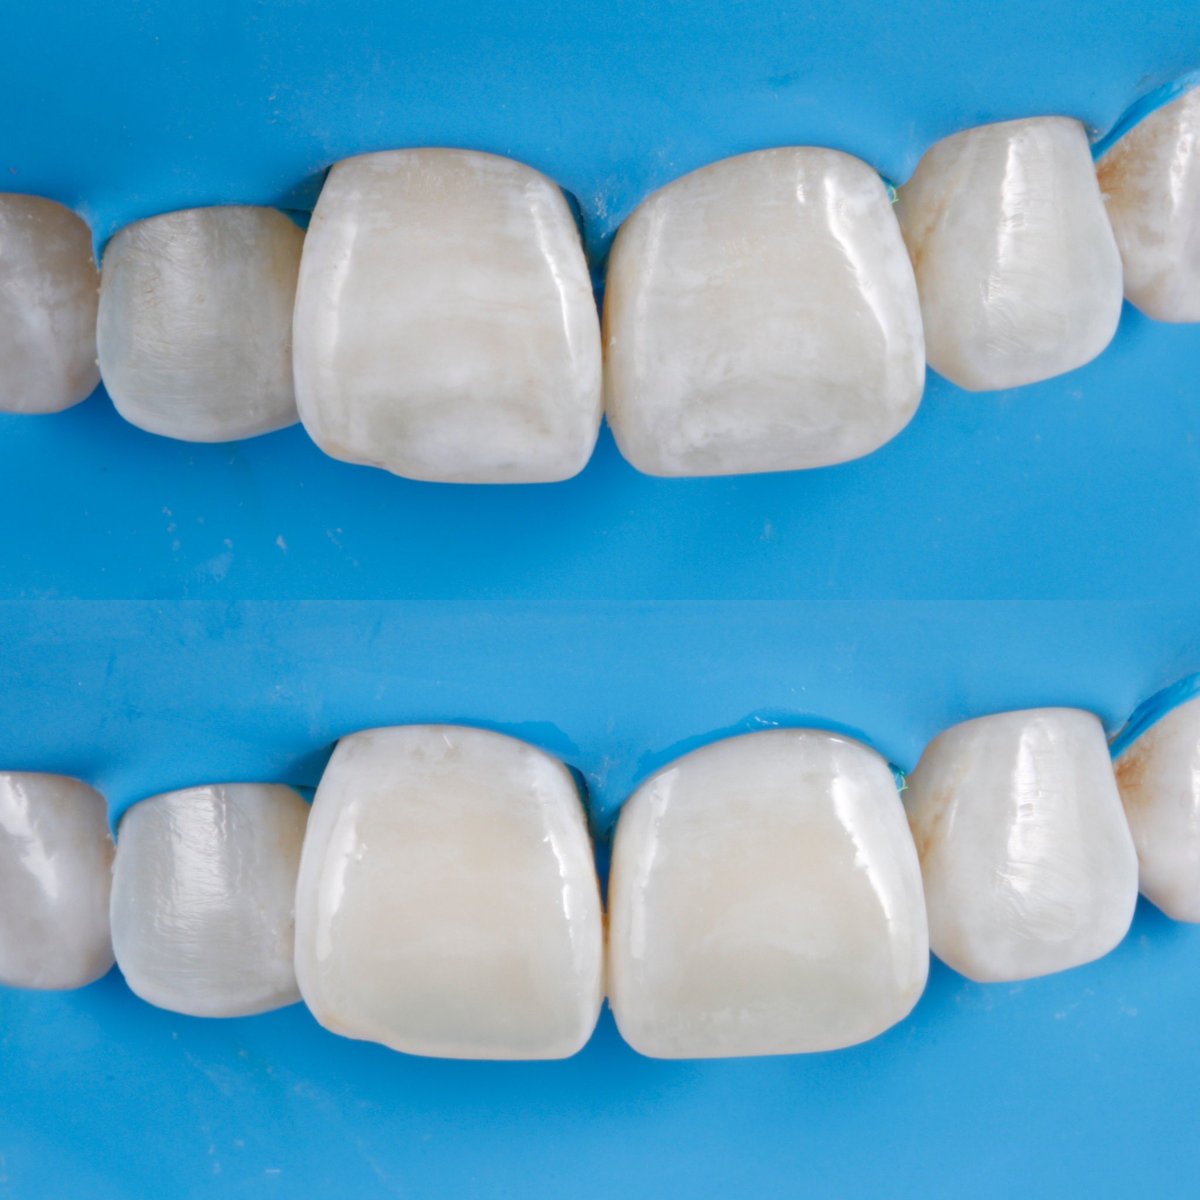 Caso de Odontología de mínima invasión ✨ 
ICON, resina infiltrante para manchas de hipomineralización en los dos centrales en tercio incisal 👌🏻✅

#sonrisa #dientessanos #odontologianoinvasiva #ICON #resinainfiltrante